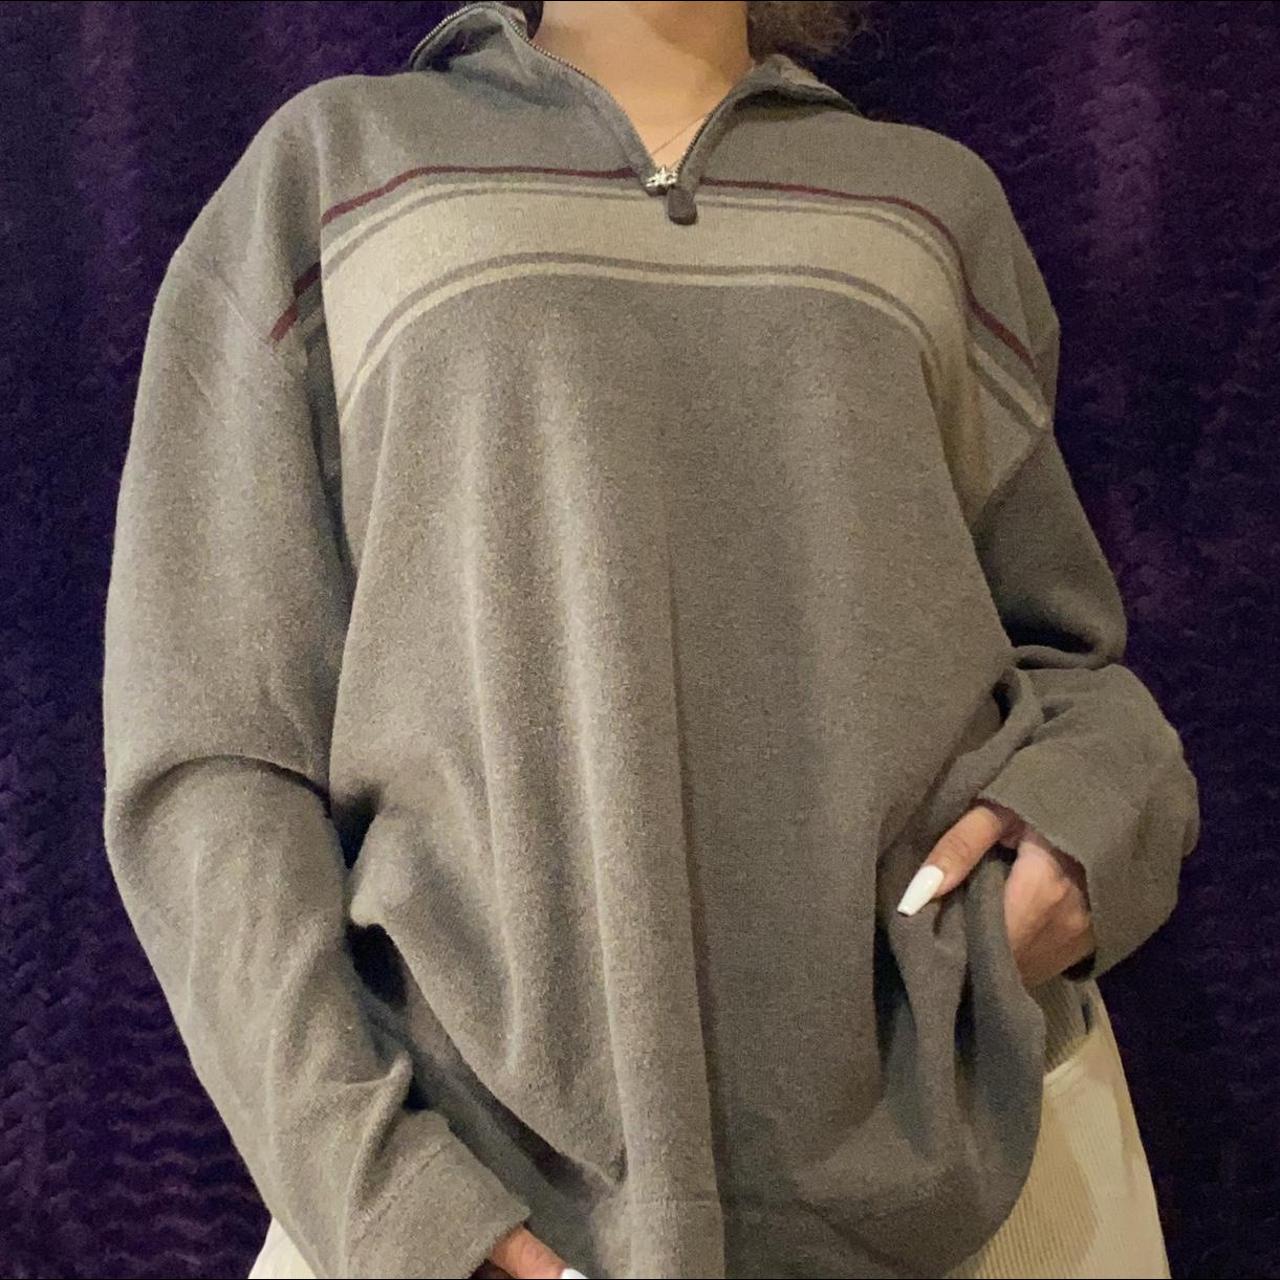 Product Image 1 - Earthtone quarter zip sweater 🤎
Super